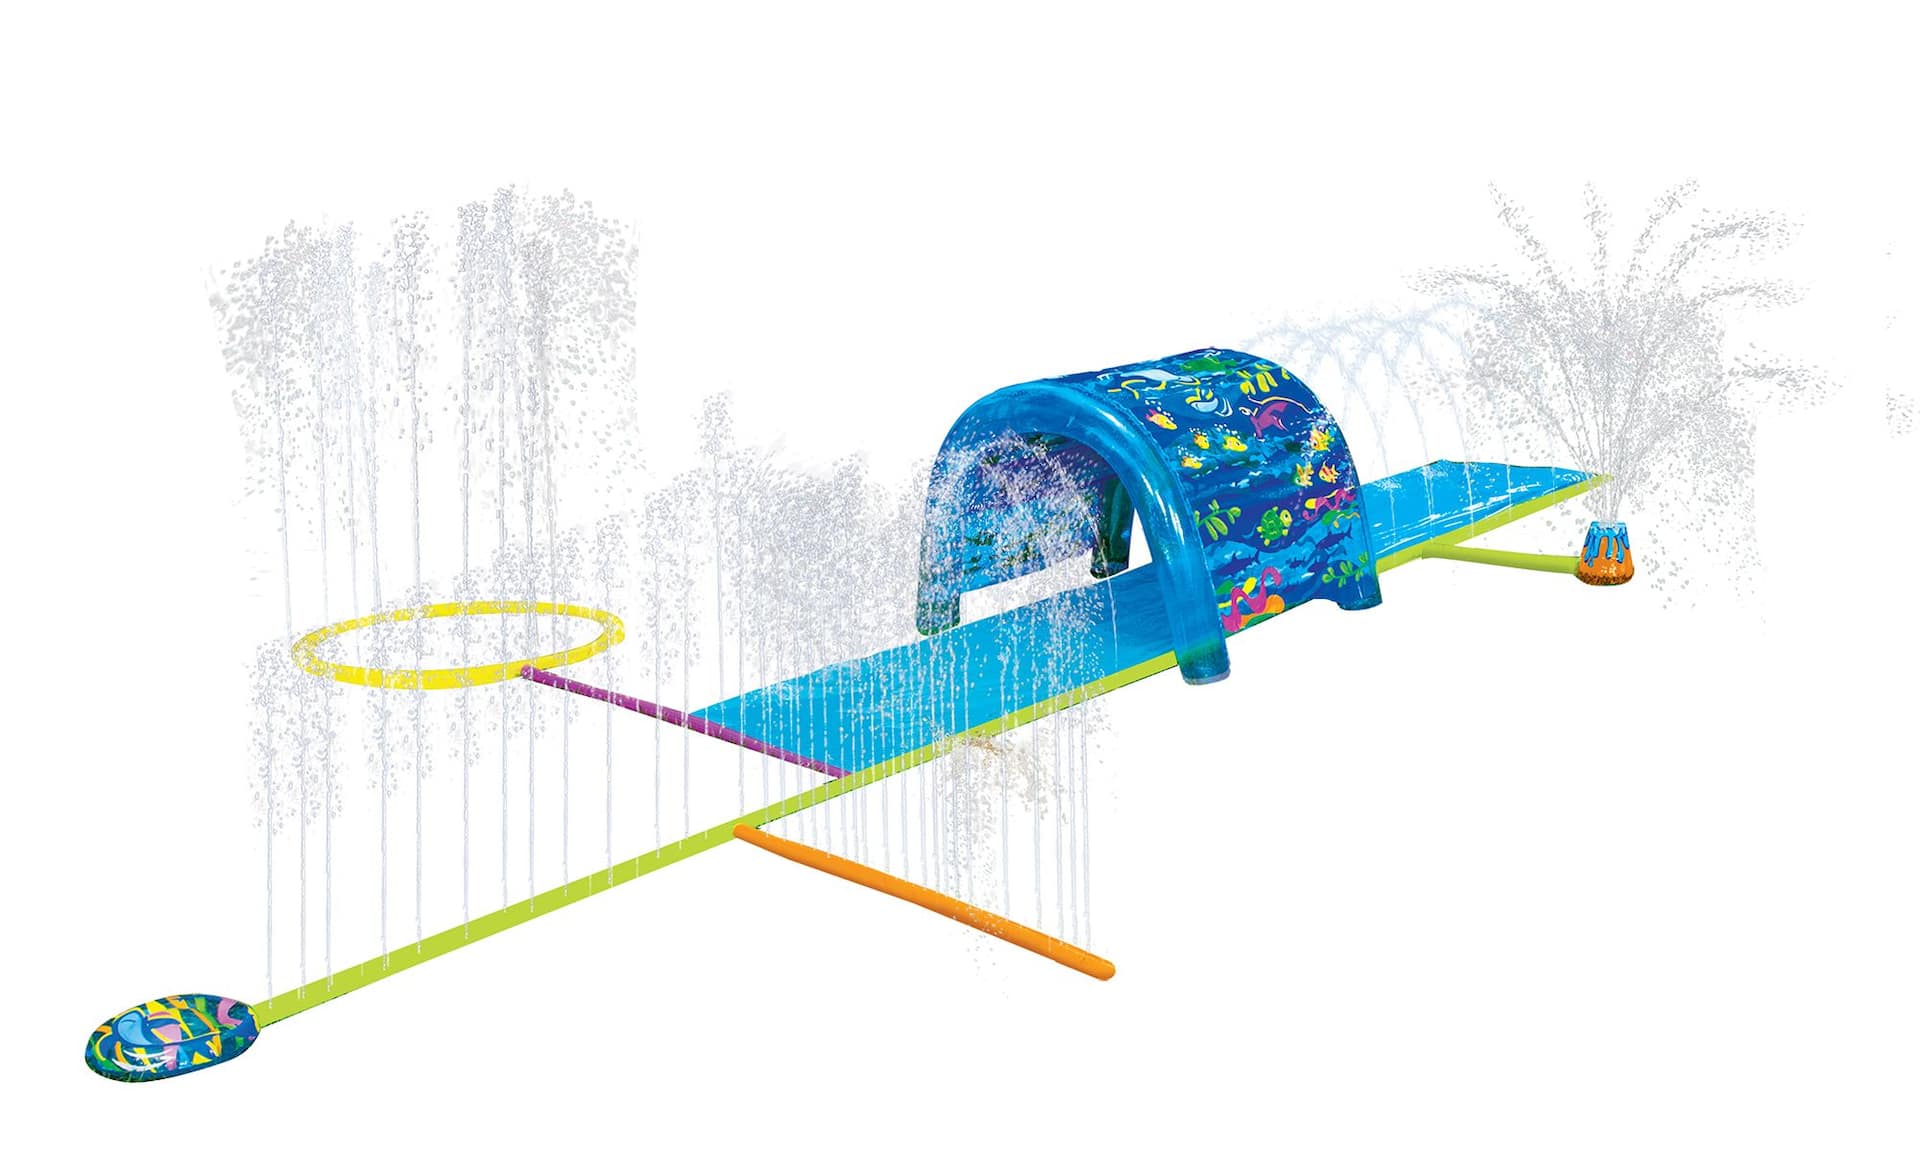 Banzai Splash 'N Slide Sprinkler Park, Kids' Outdoor Summer Water